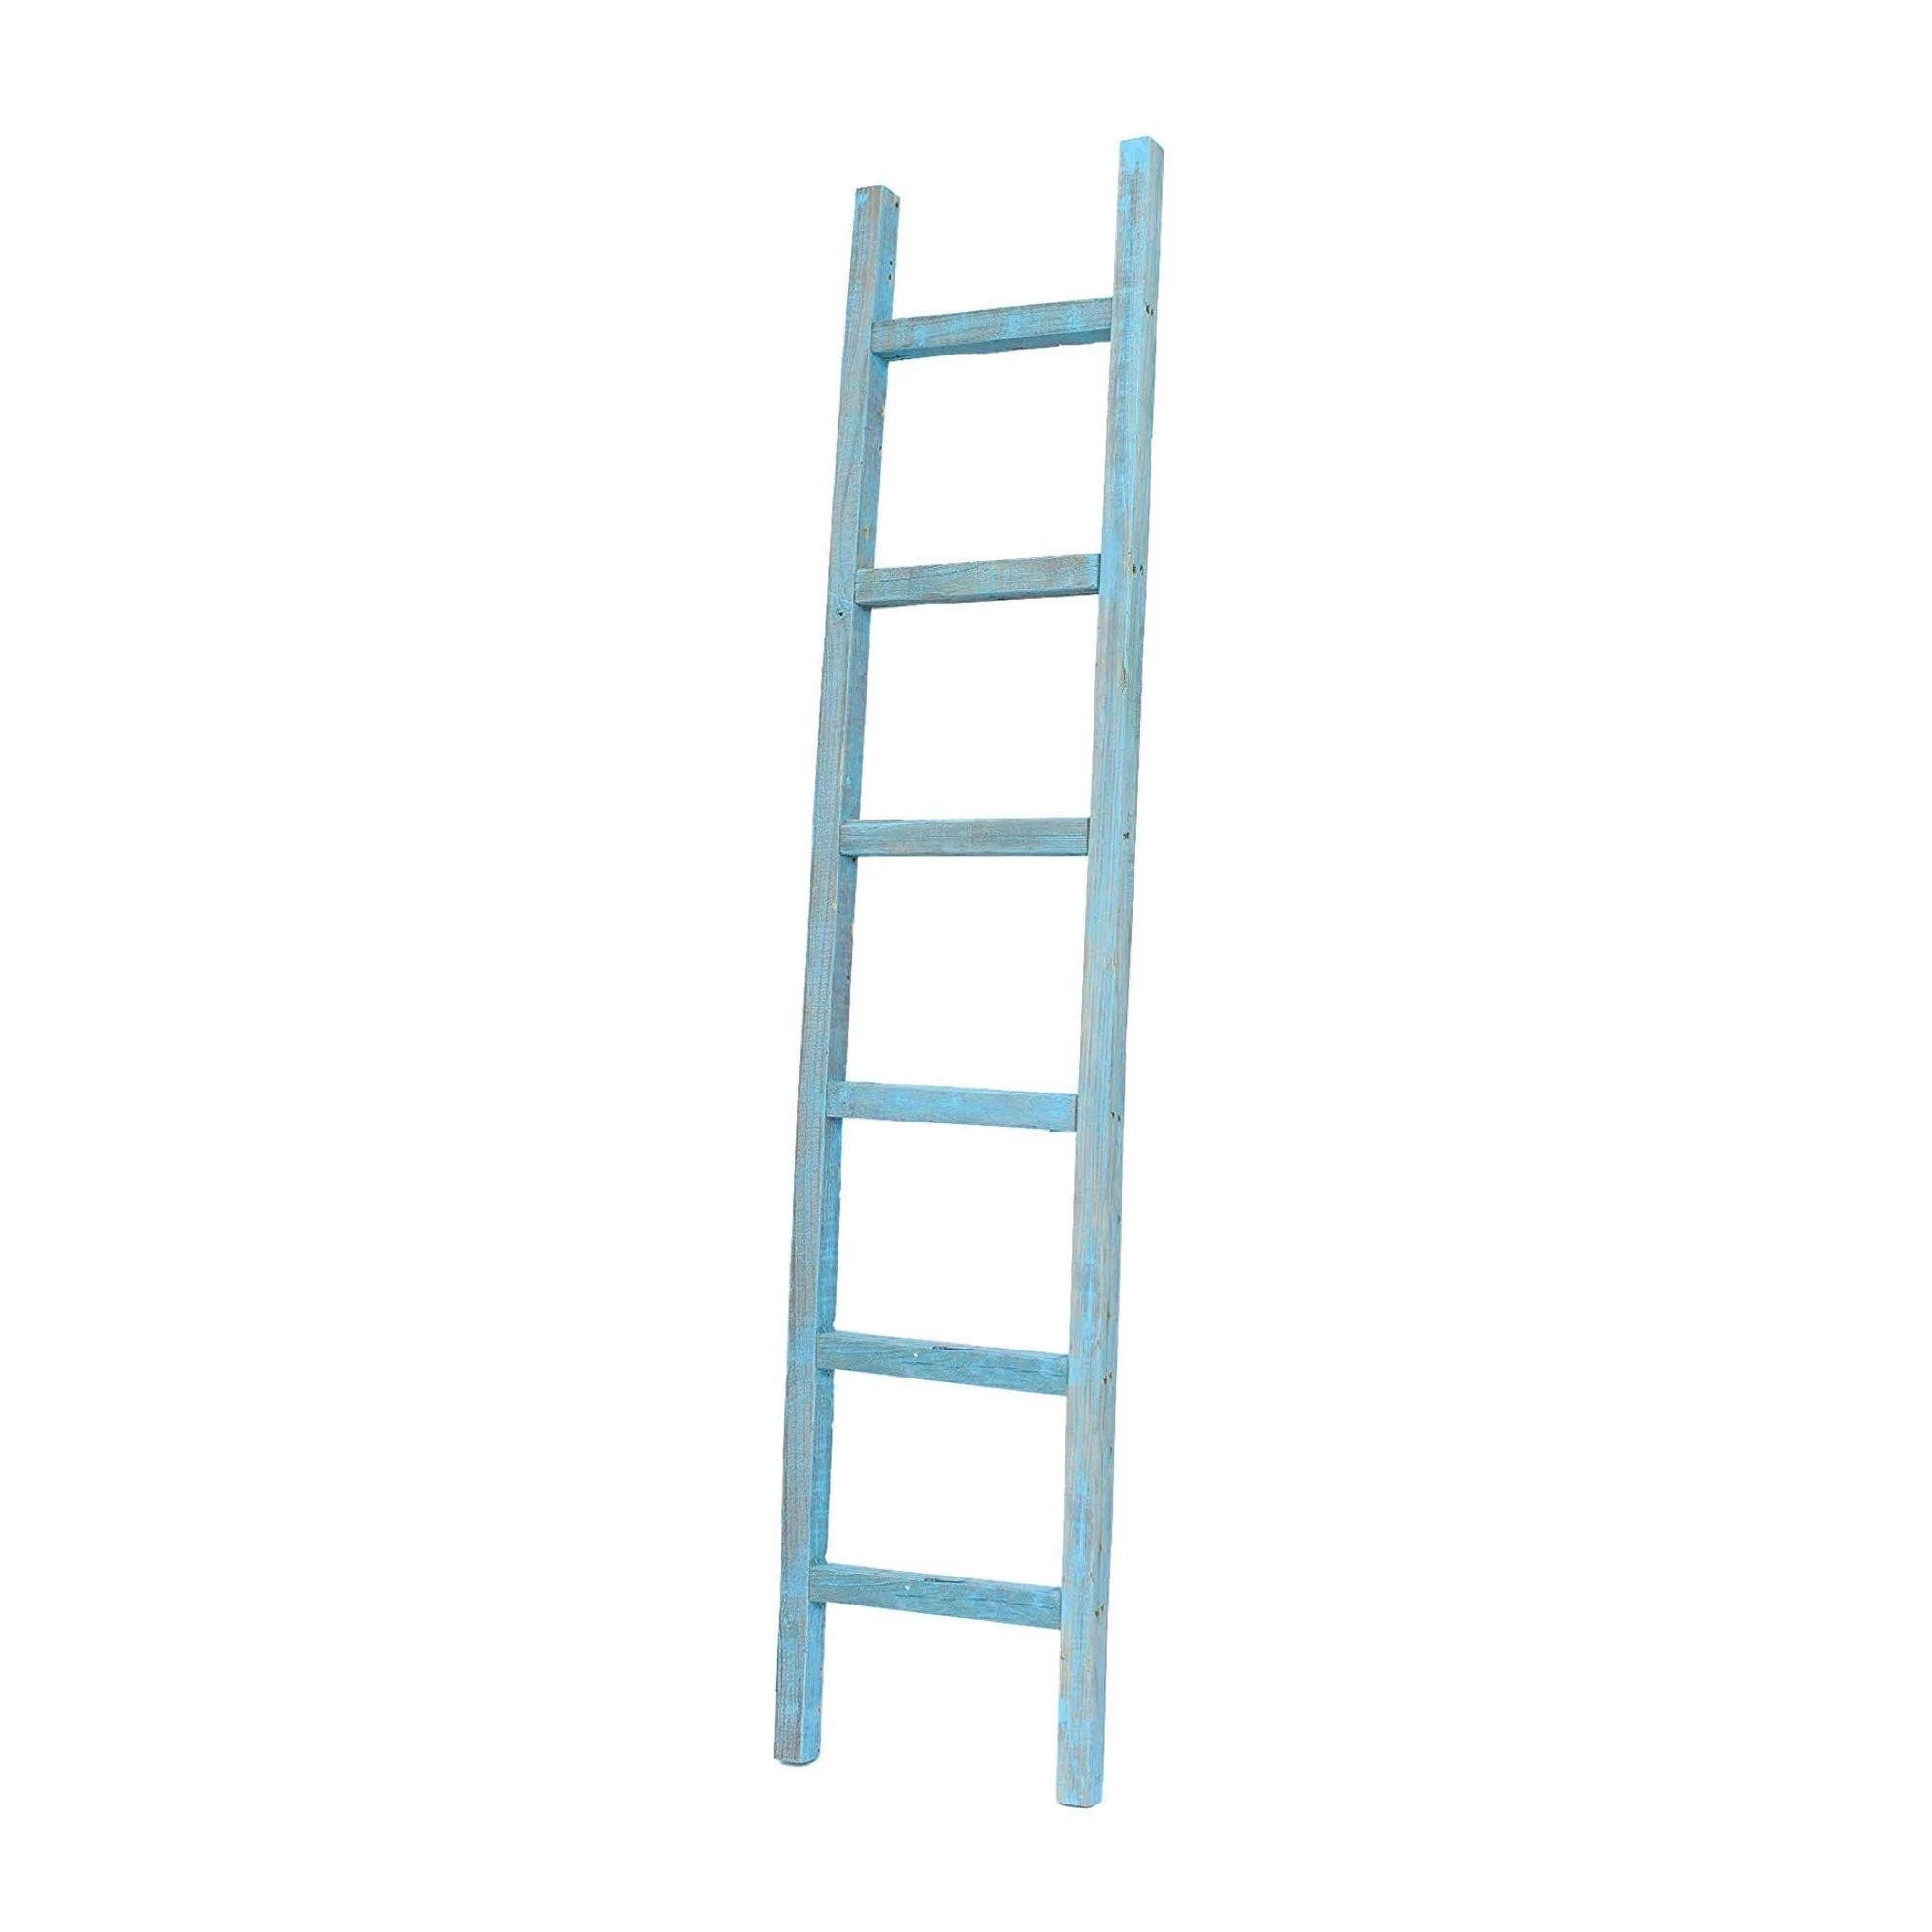 New -  Echelle Decorative Turquoise Ladder